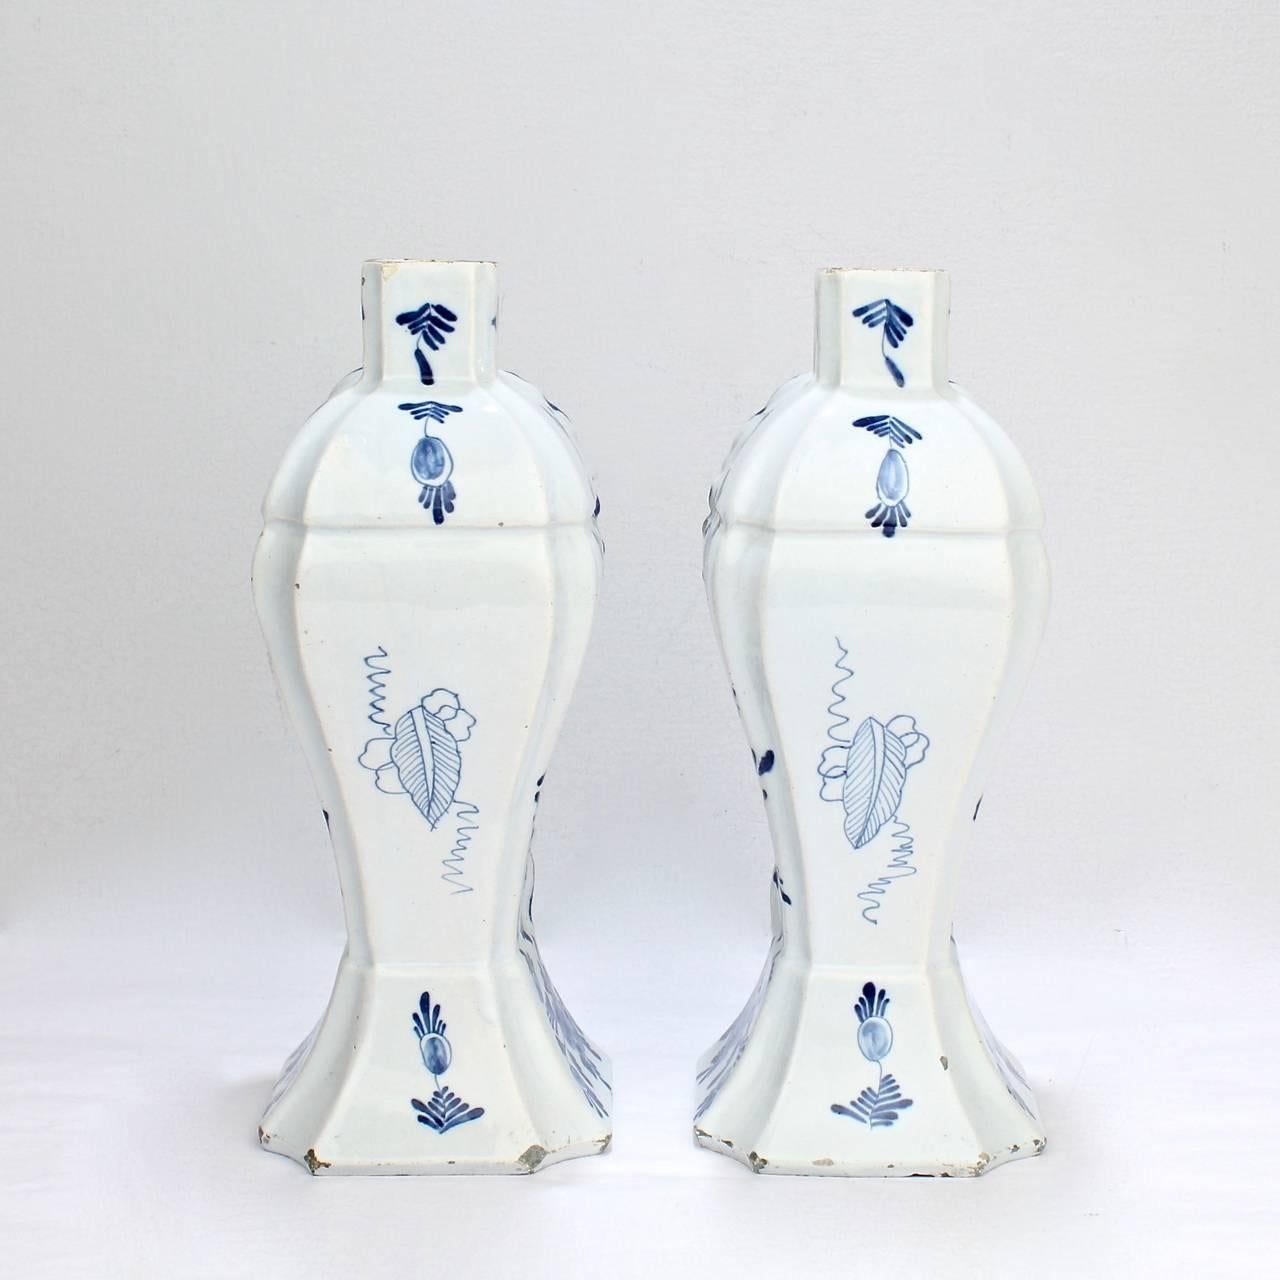 19th Century Pair of Antique Blue and White Dutch Delft Mantel Garniture Vases or Jars